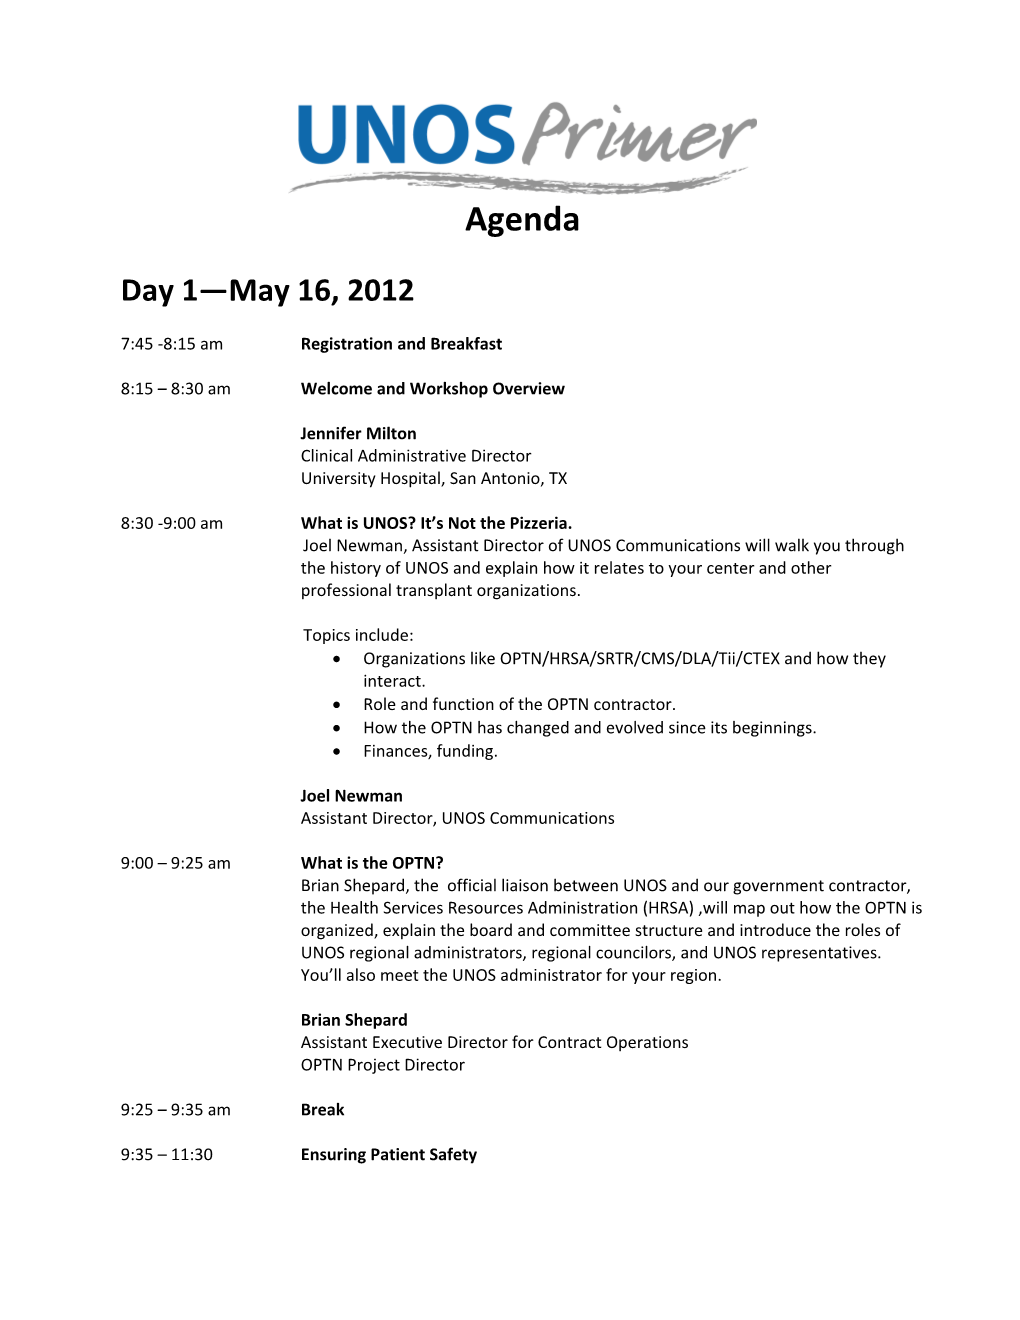 October UNOS Primer 2011 Agenda